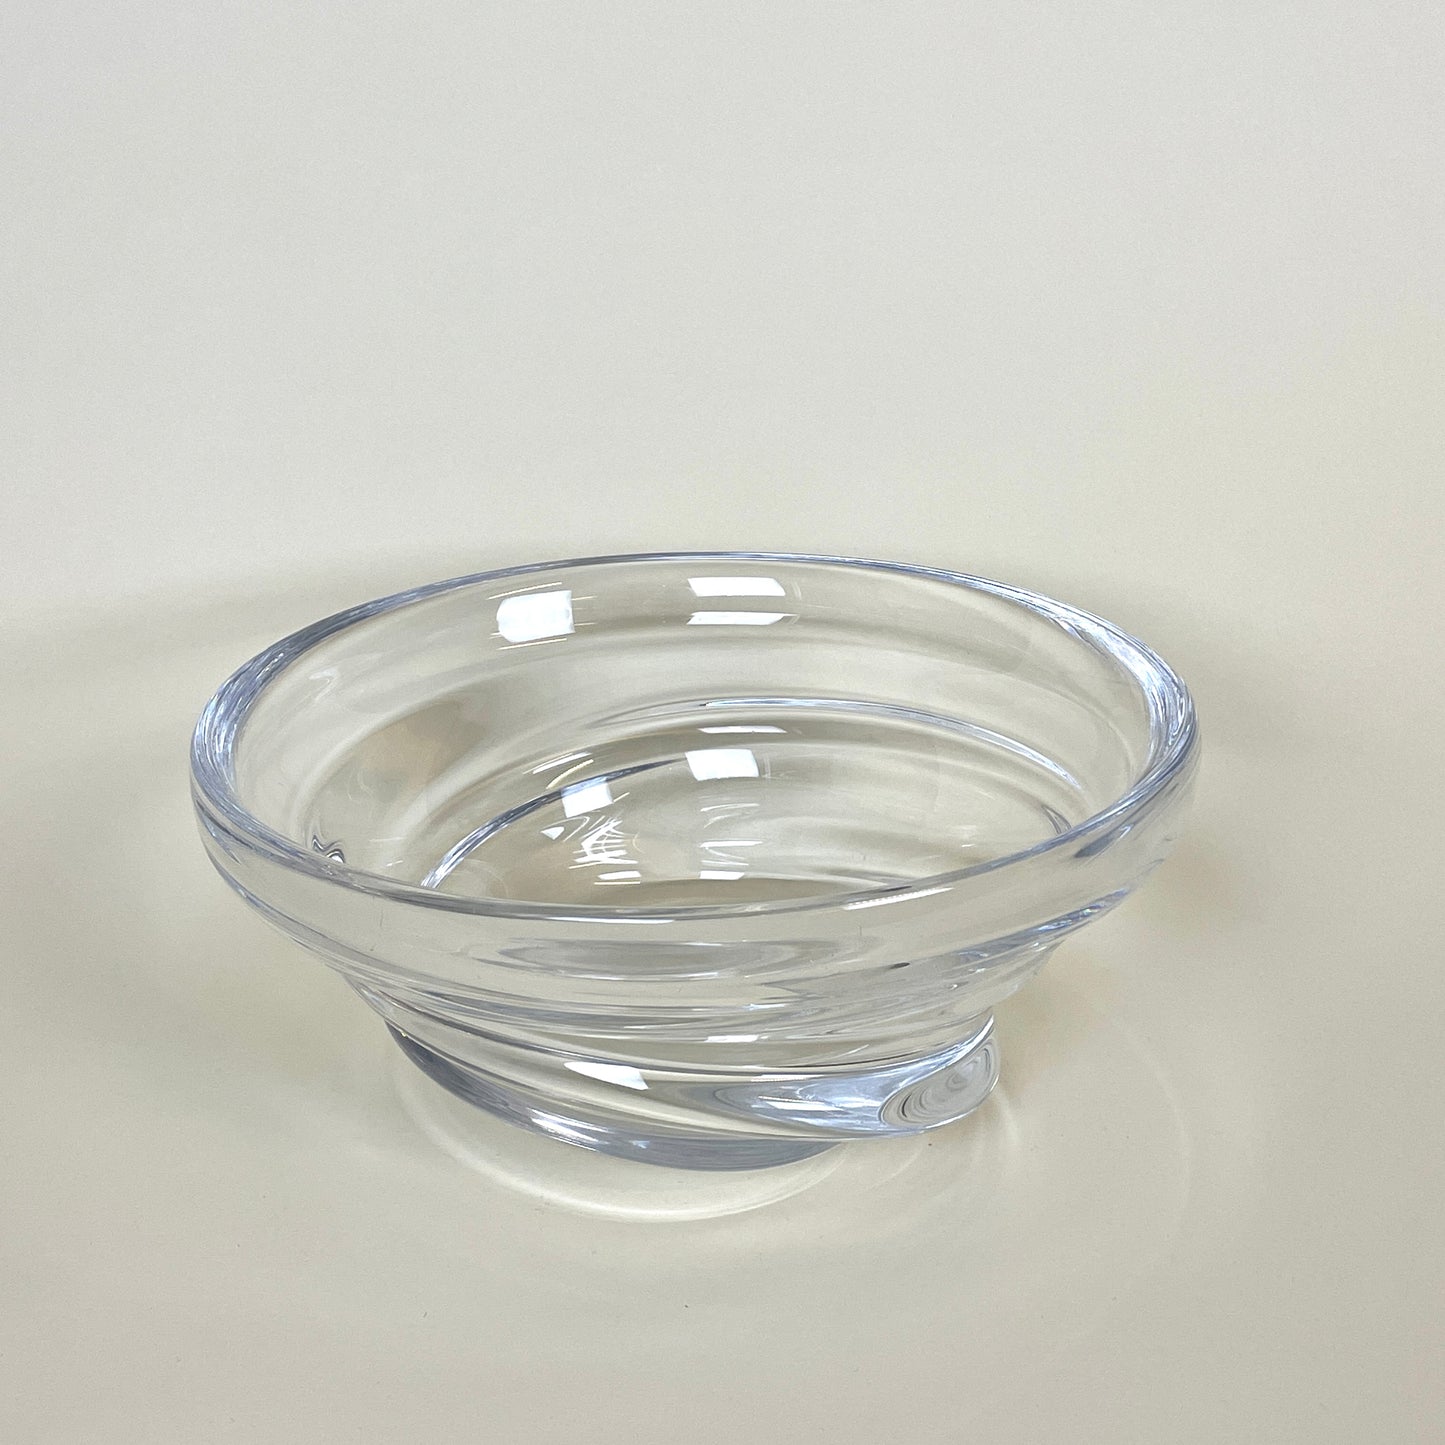 Glass bowl, vintage